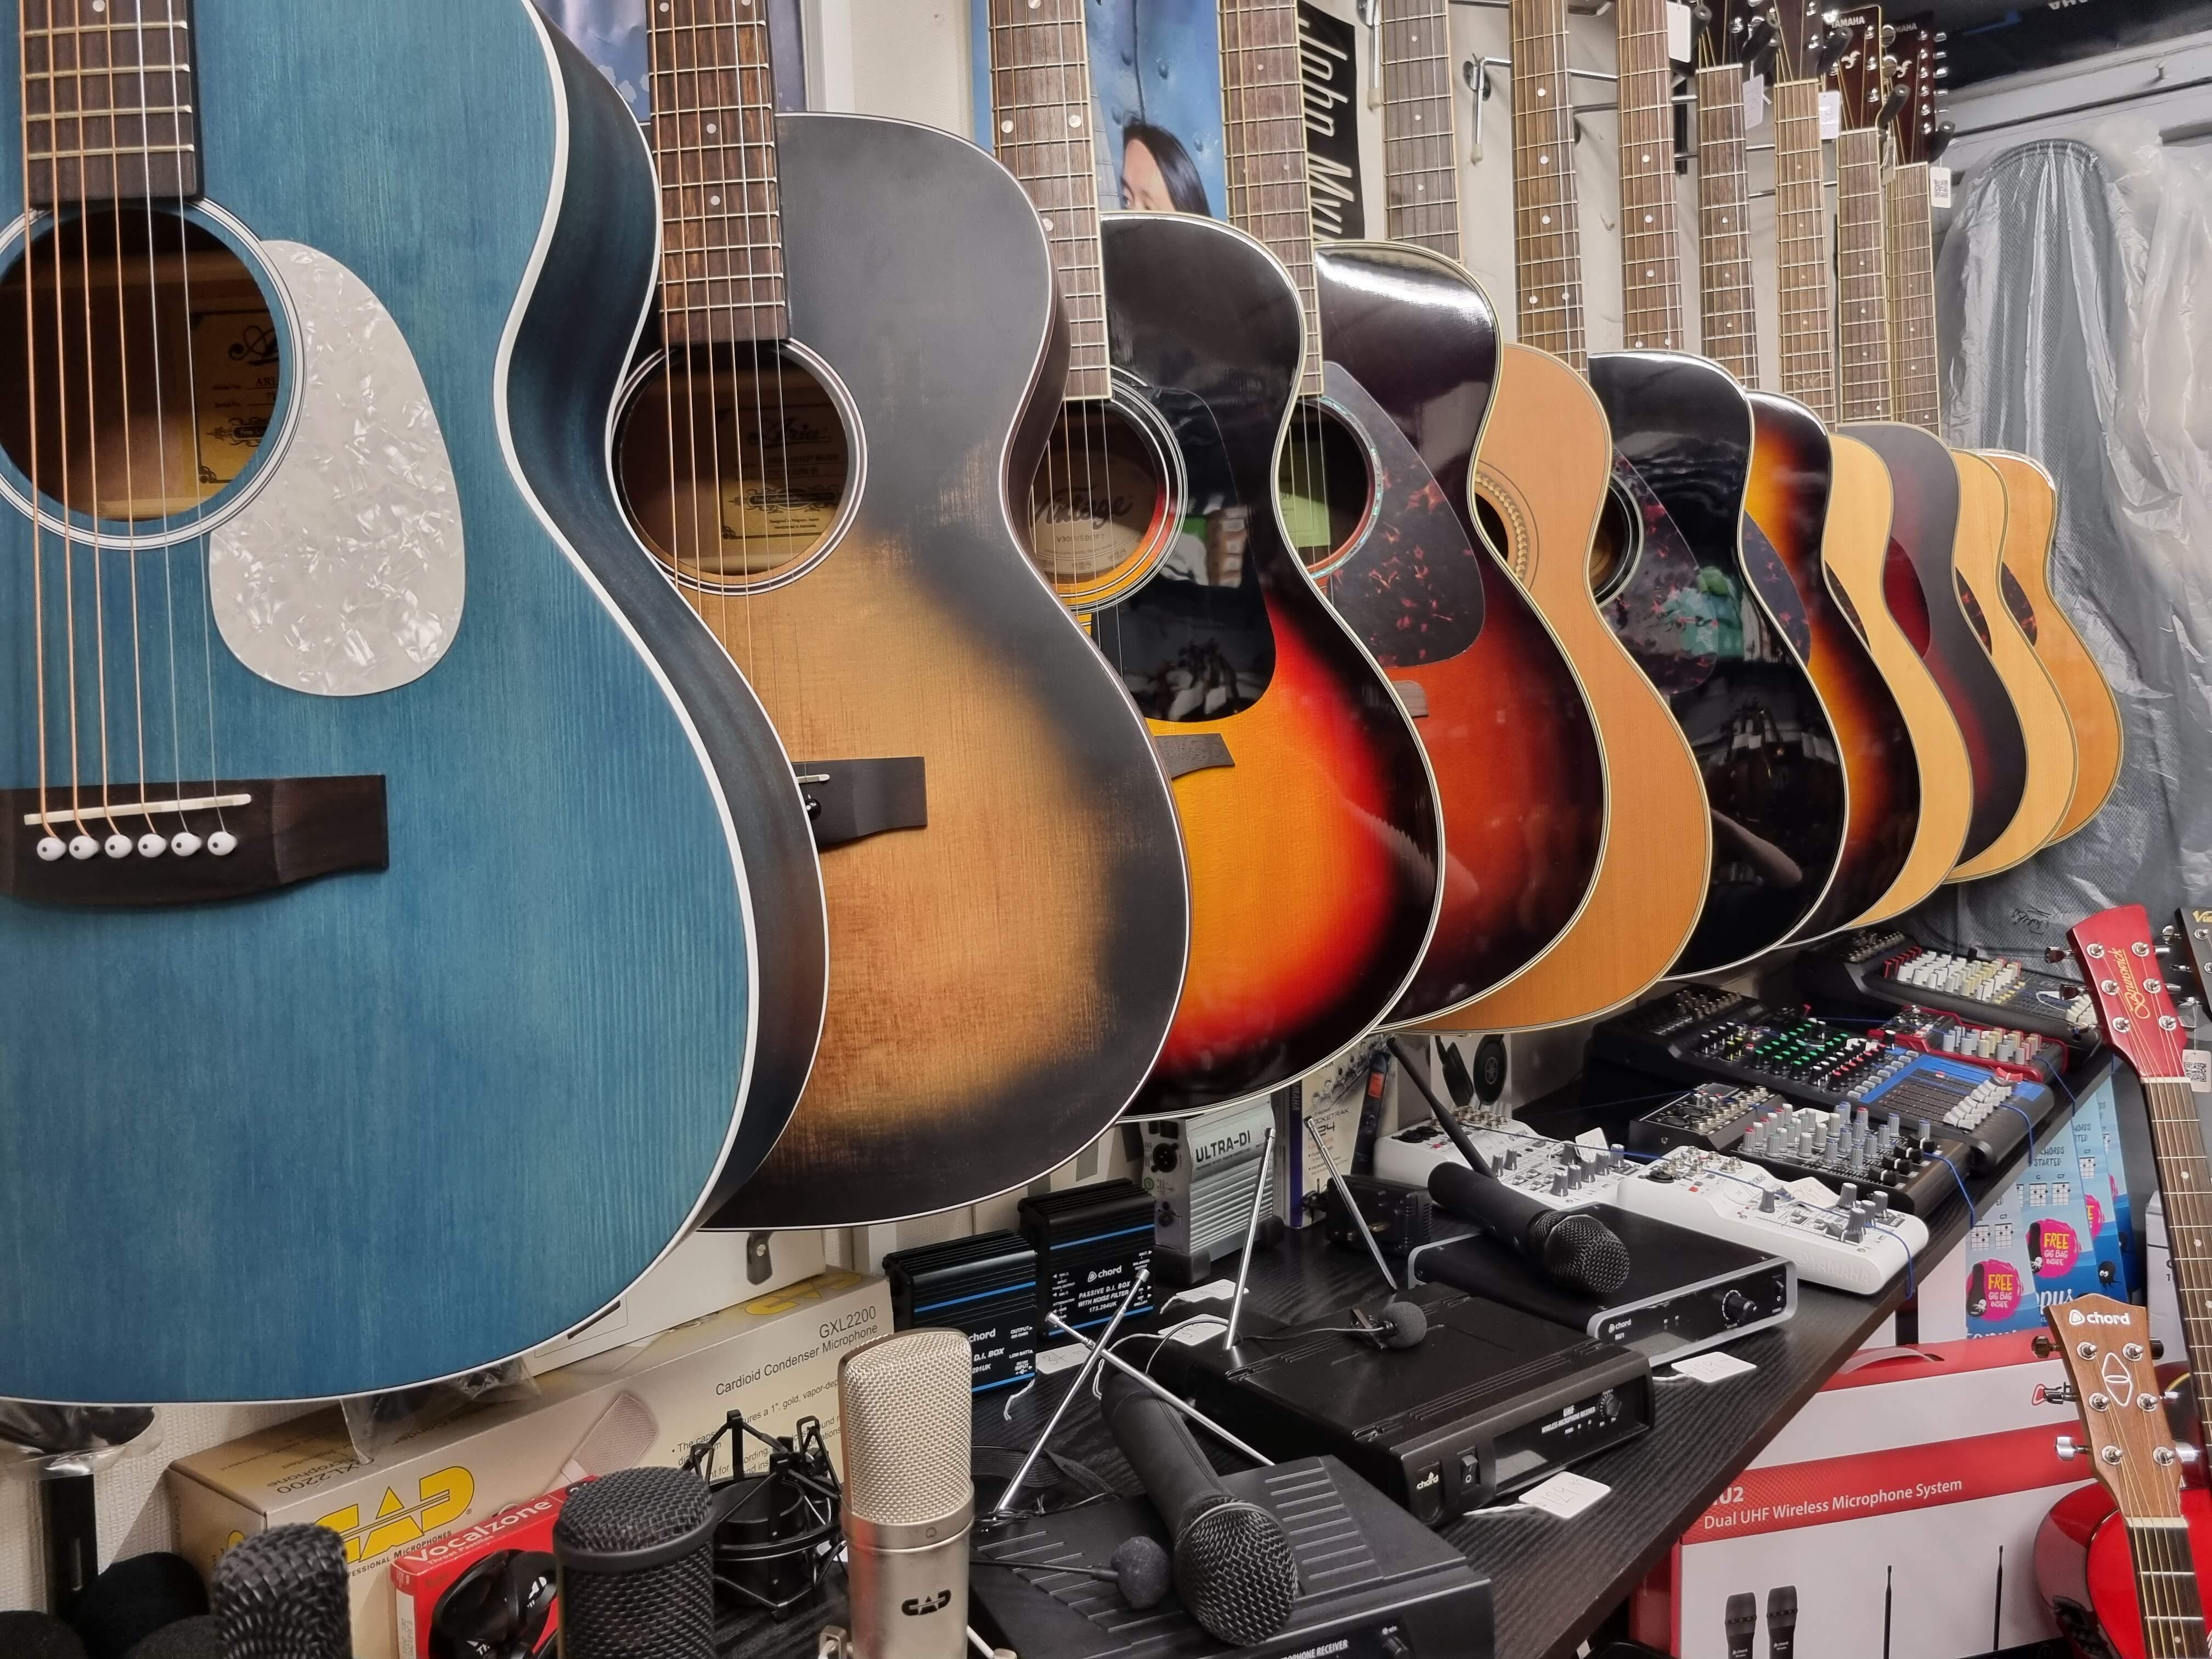 Range of acoustic guitars